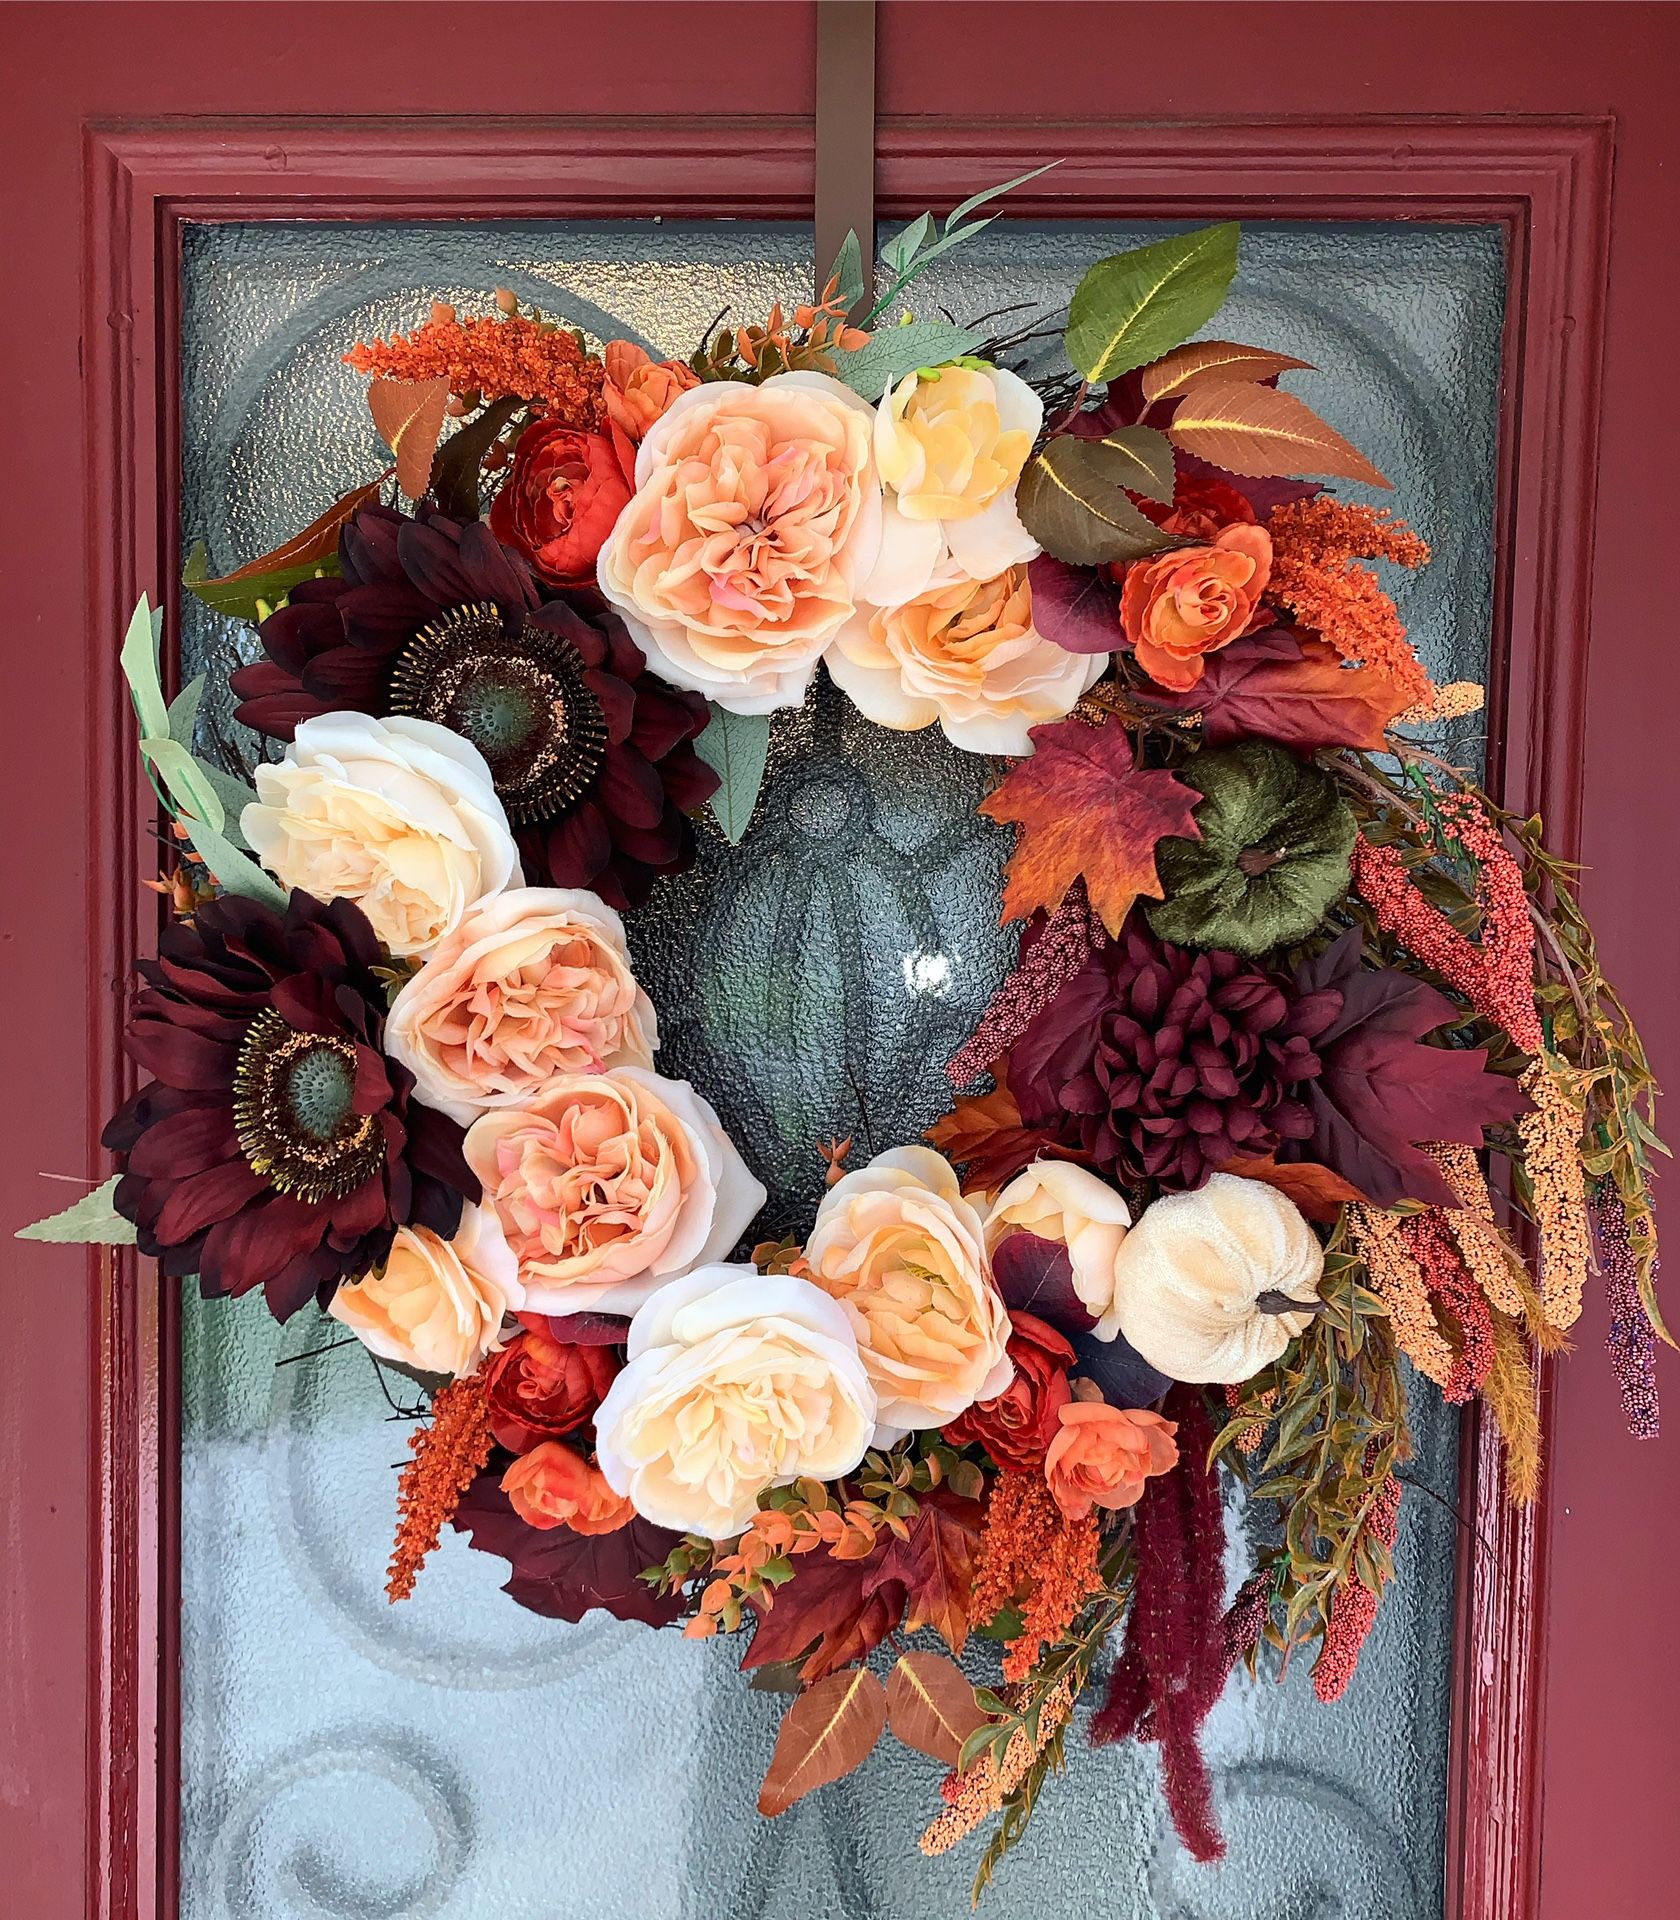 Custom Fall Wreath